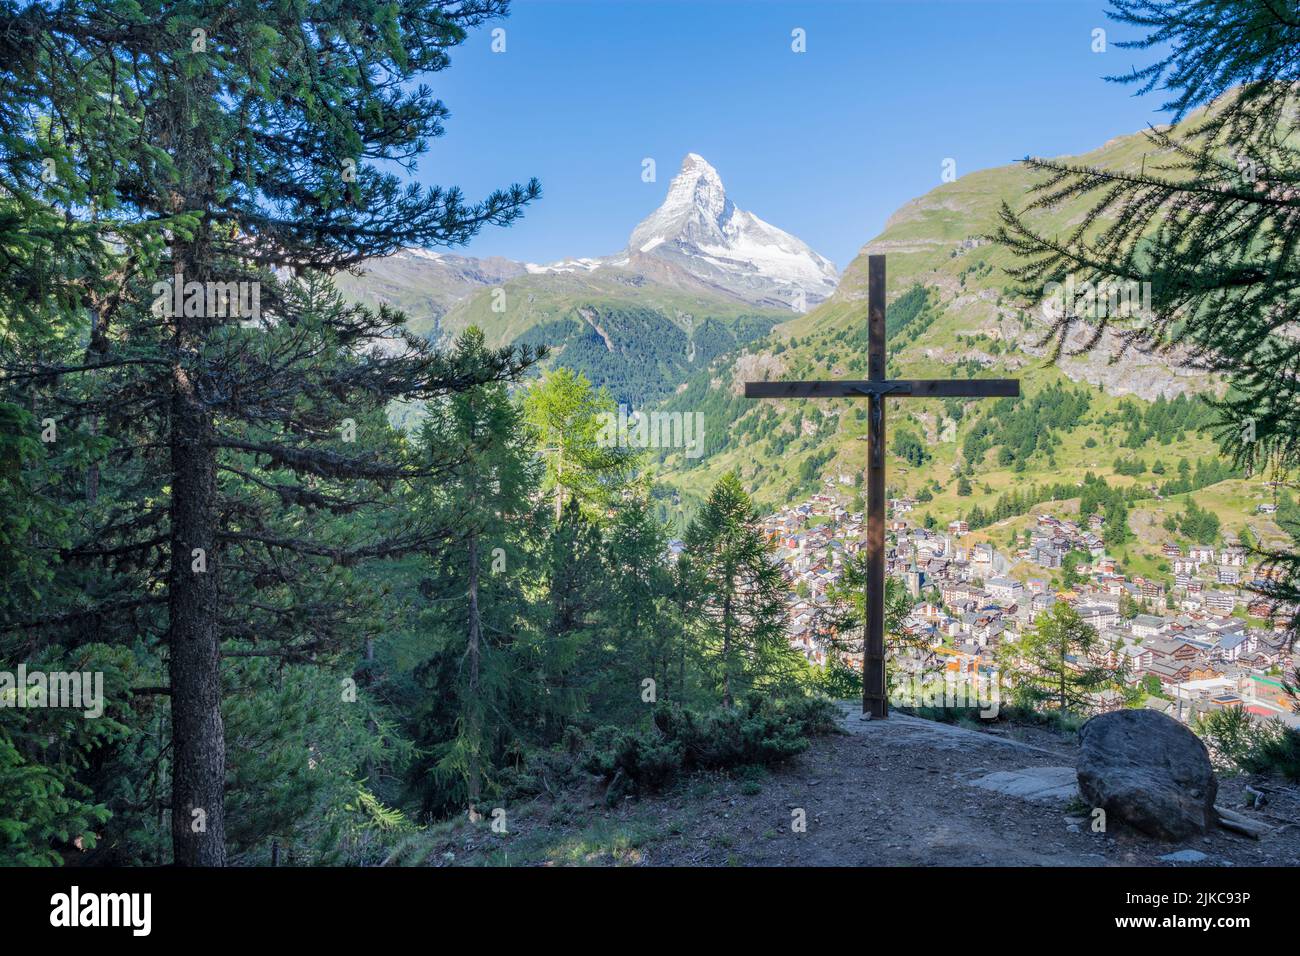 The Matterhorn peak with the cross over the Zermatt. Stock Photo